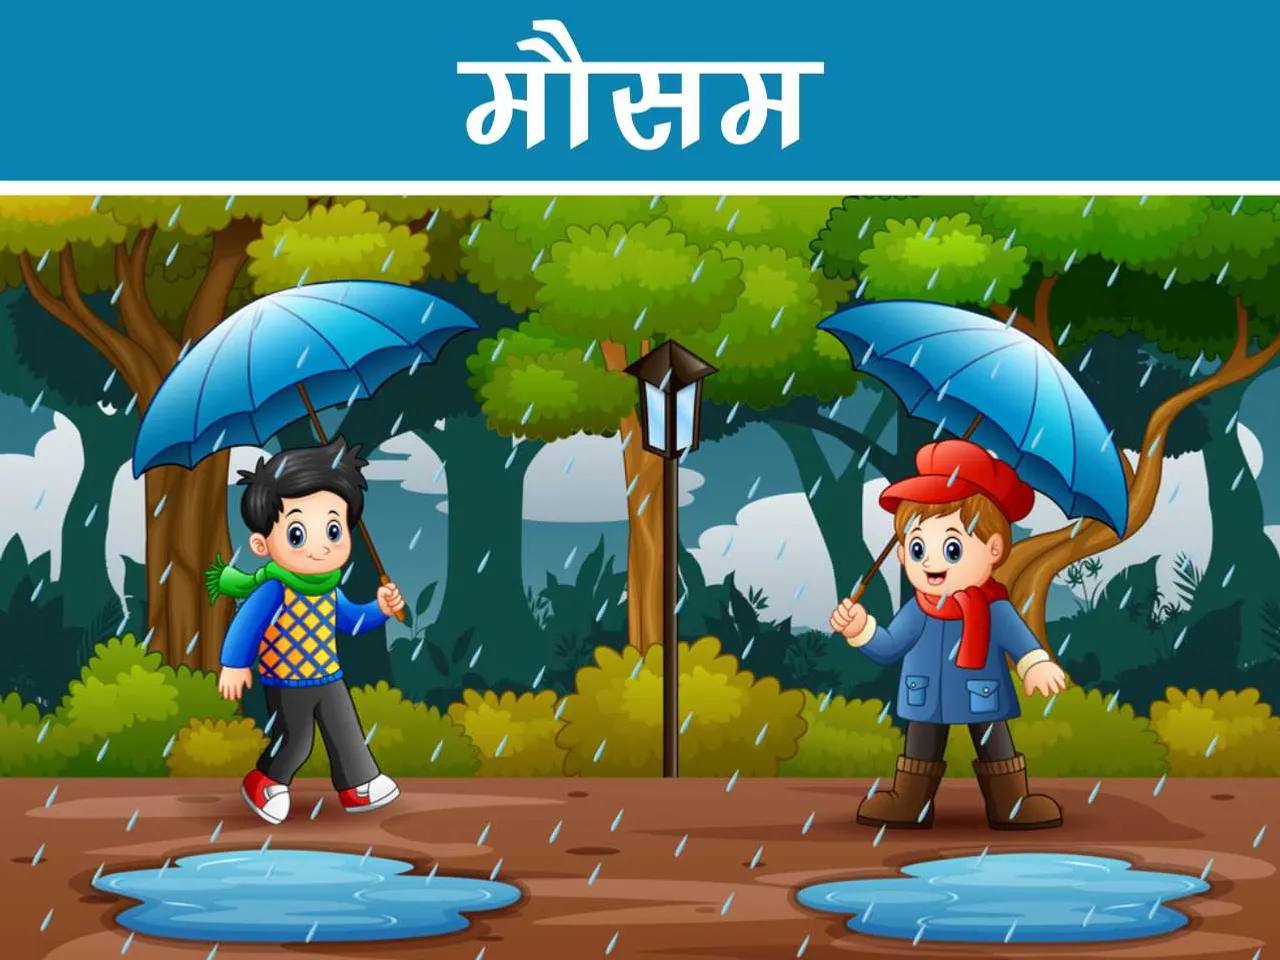 Two kids in rain with umbrella cartoon image